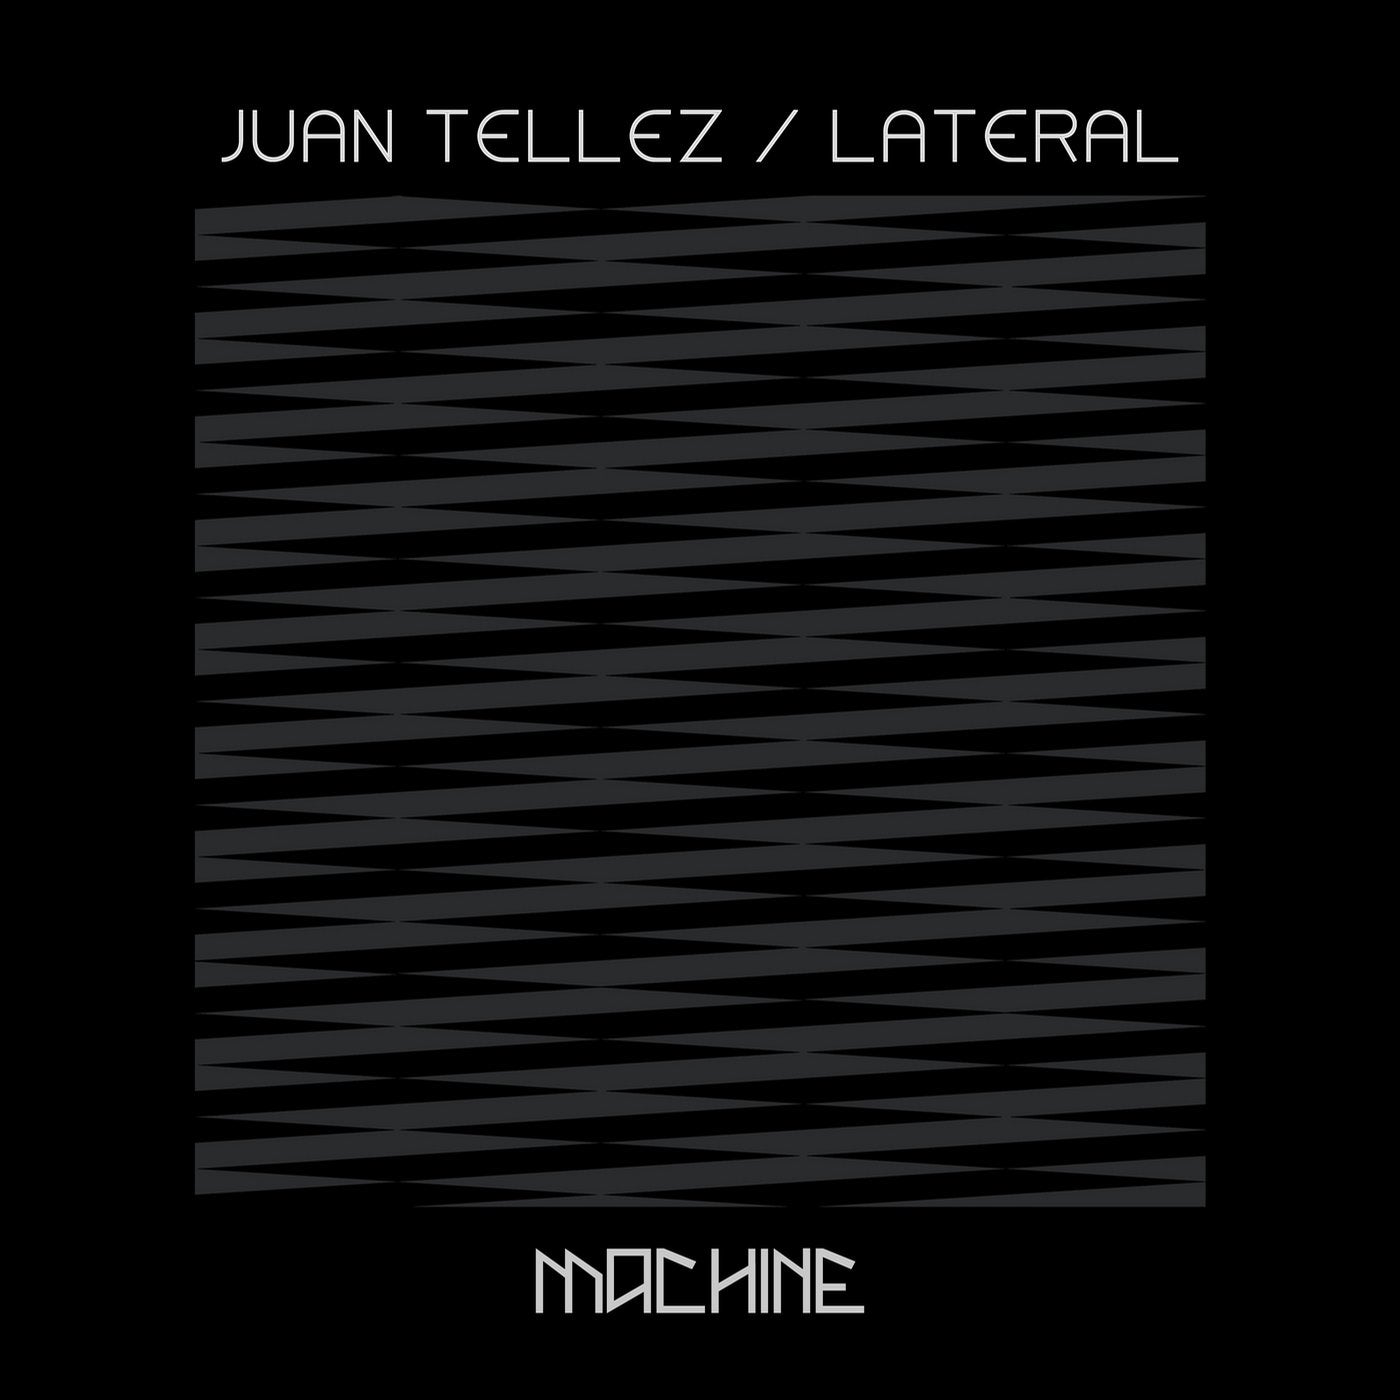 Juan Tellez / Lateral